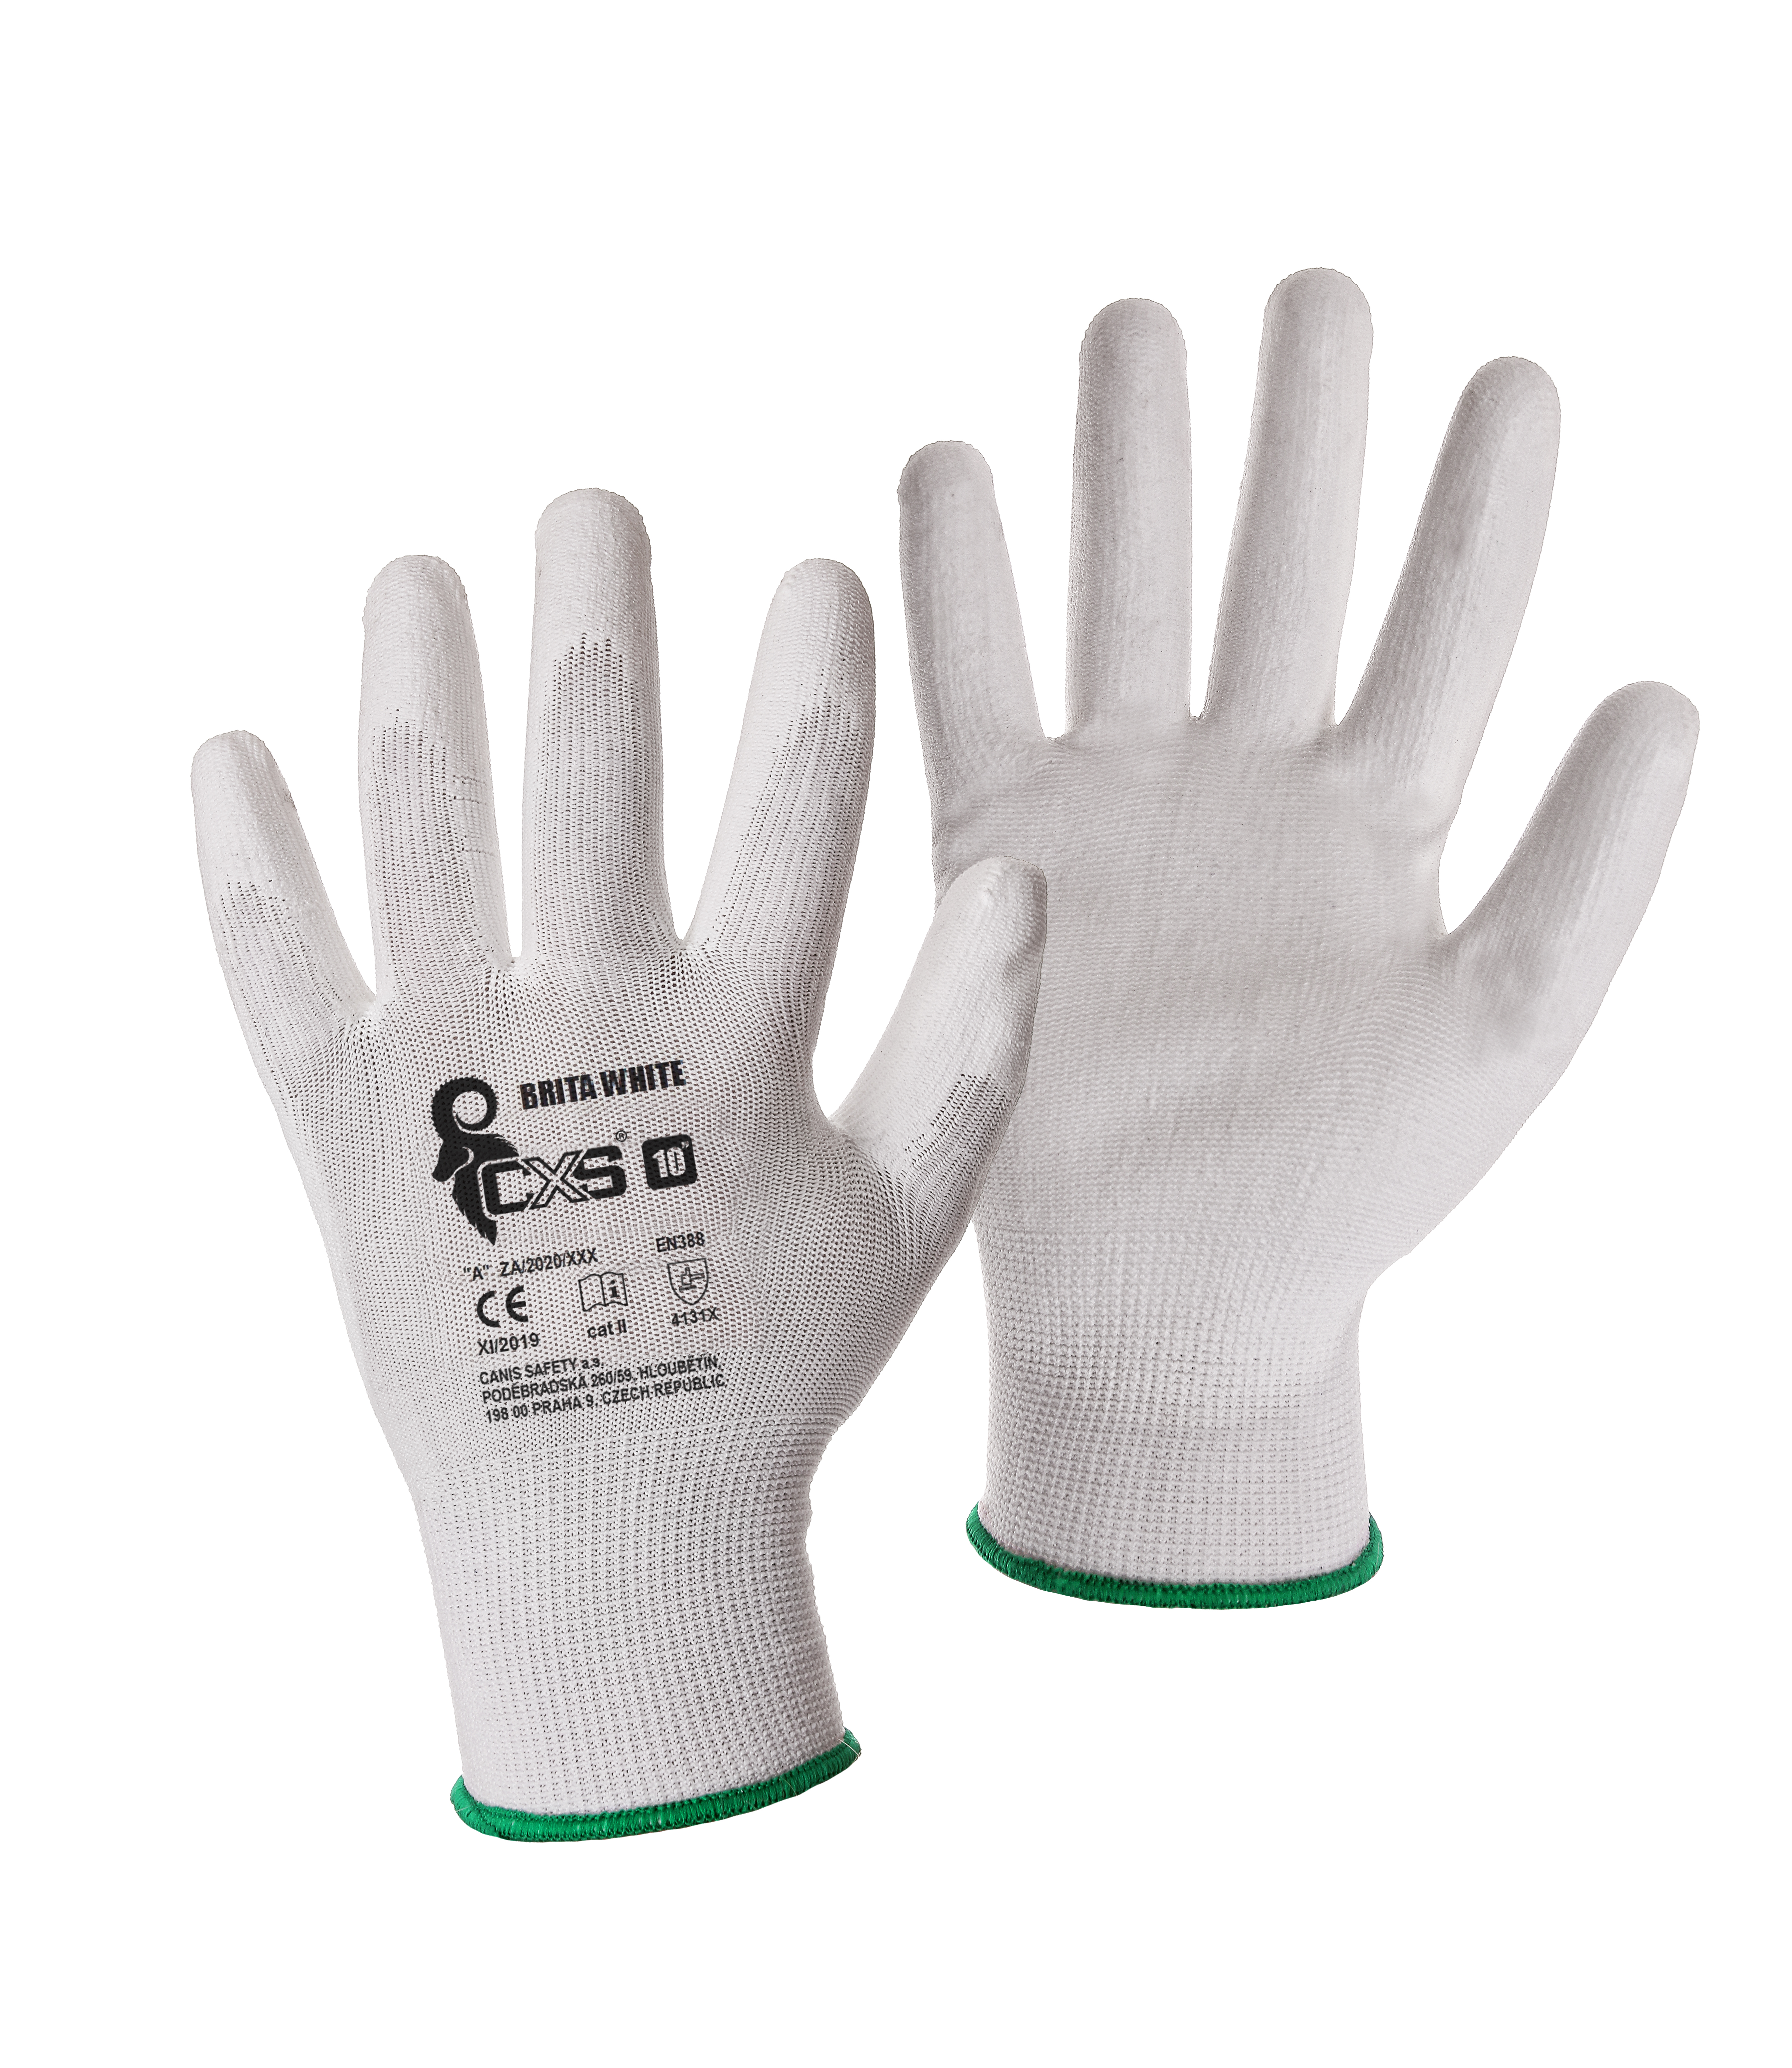 rukavice BRITA WHITE, s PU dlaní a úpletem, velikost 8 0.02 Kg TOP Sklad4 606042 28